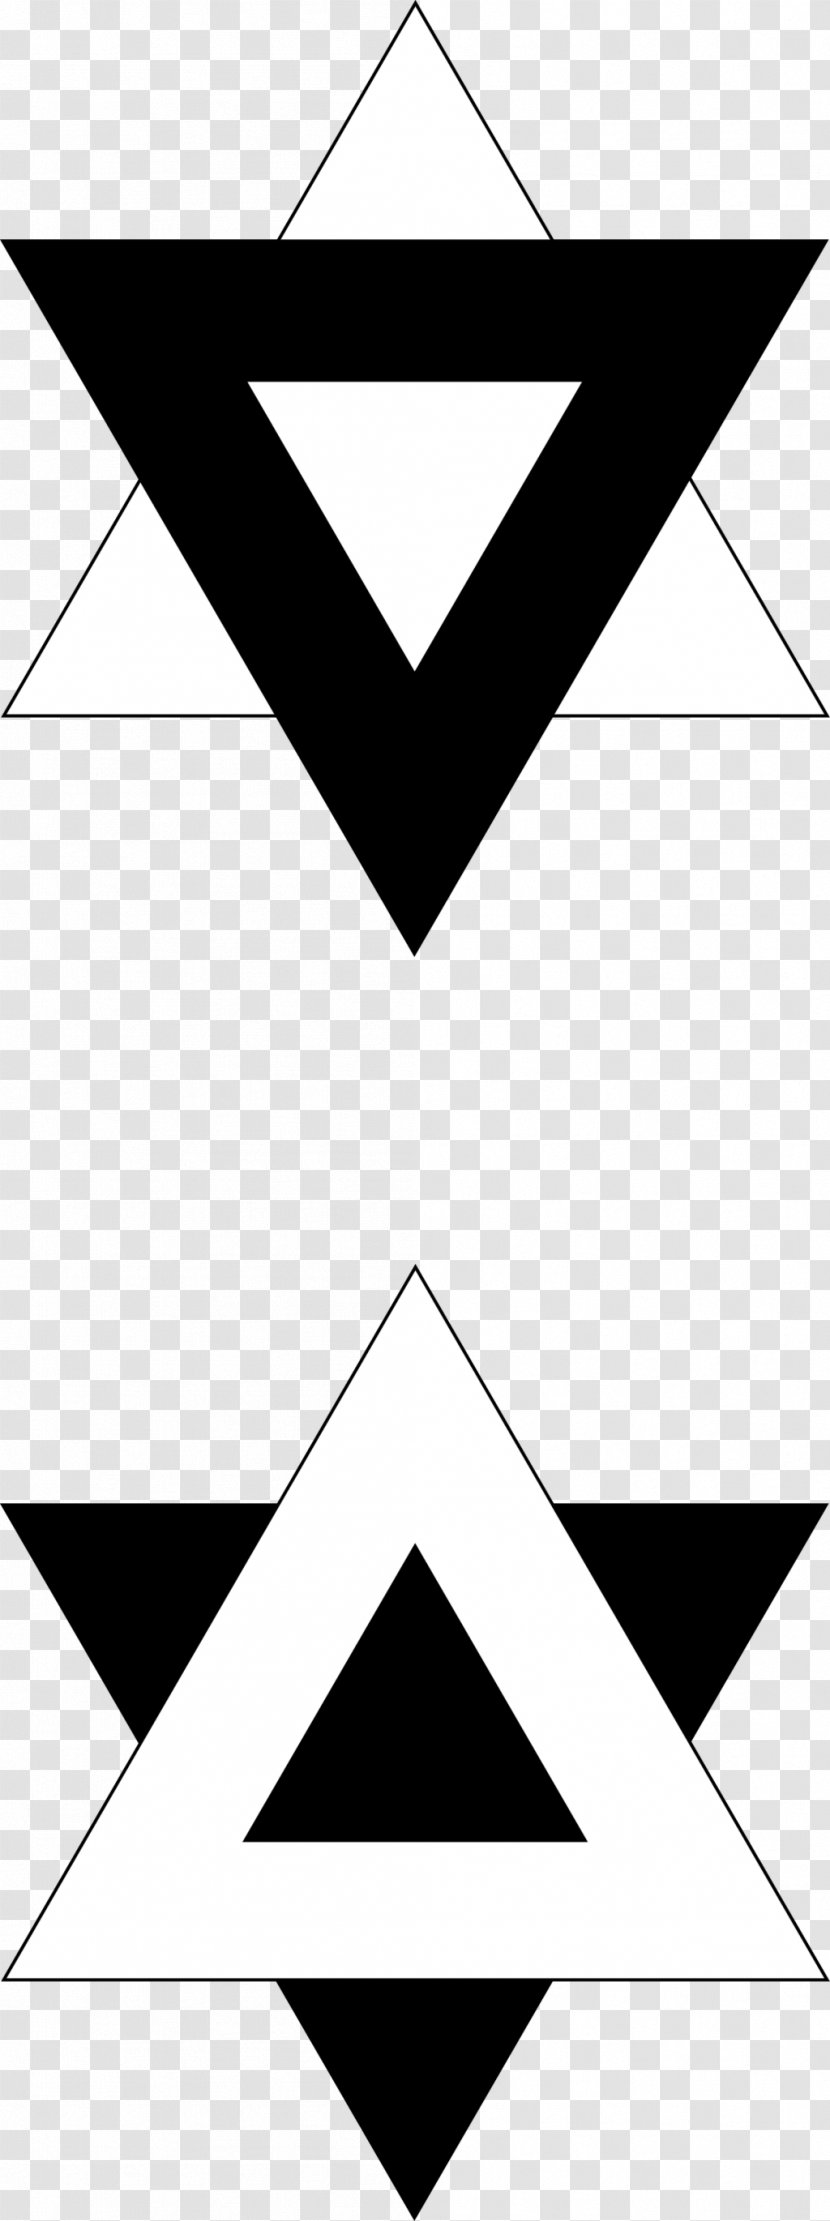 Yin And Yang Symbol Valknut Triangle I Ching - Line Art Transparent PNG